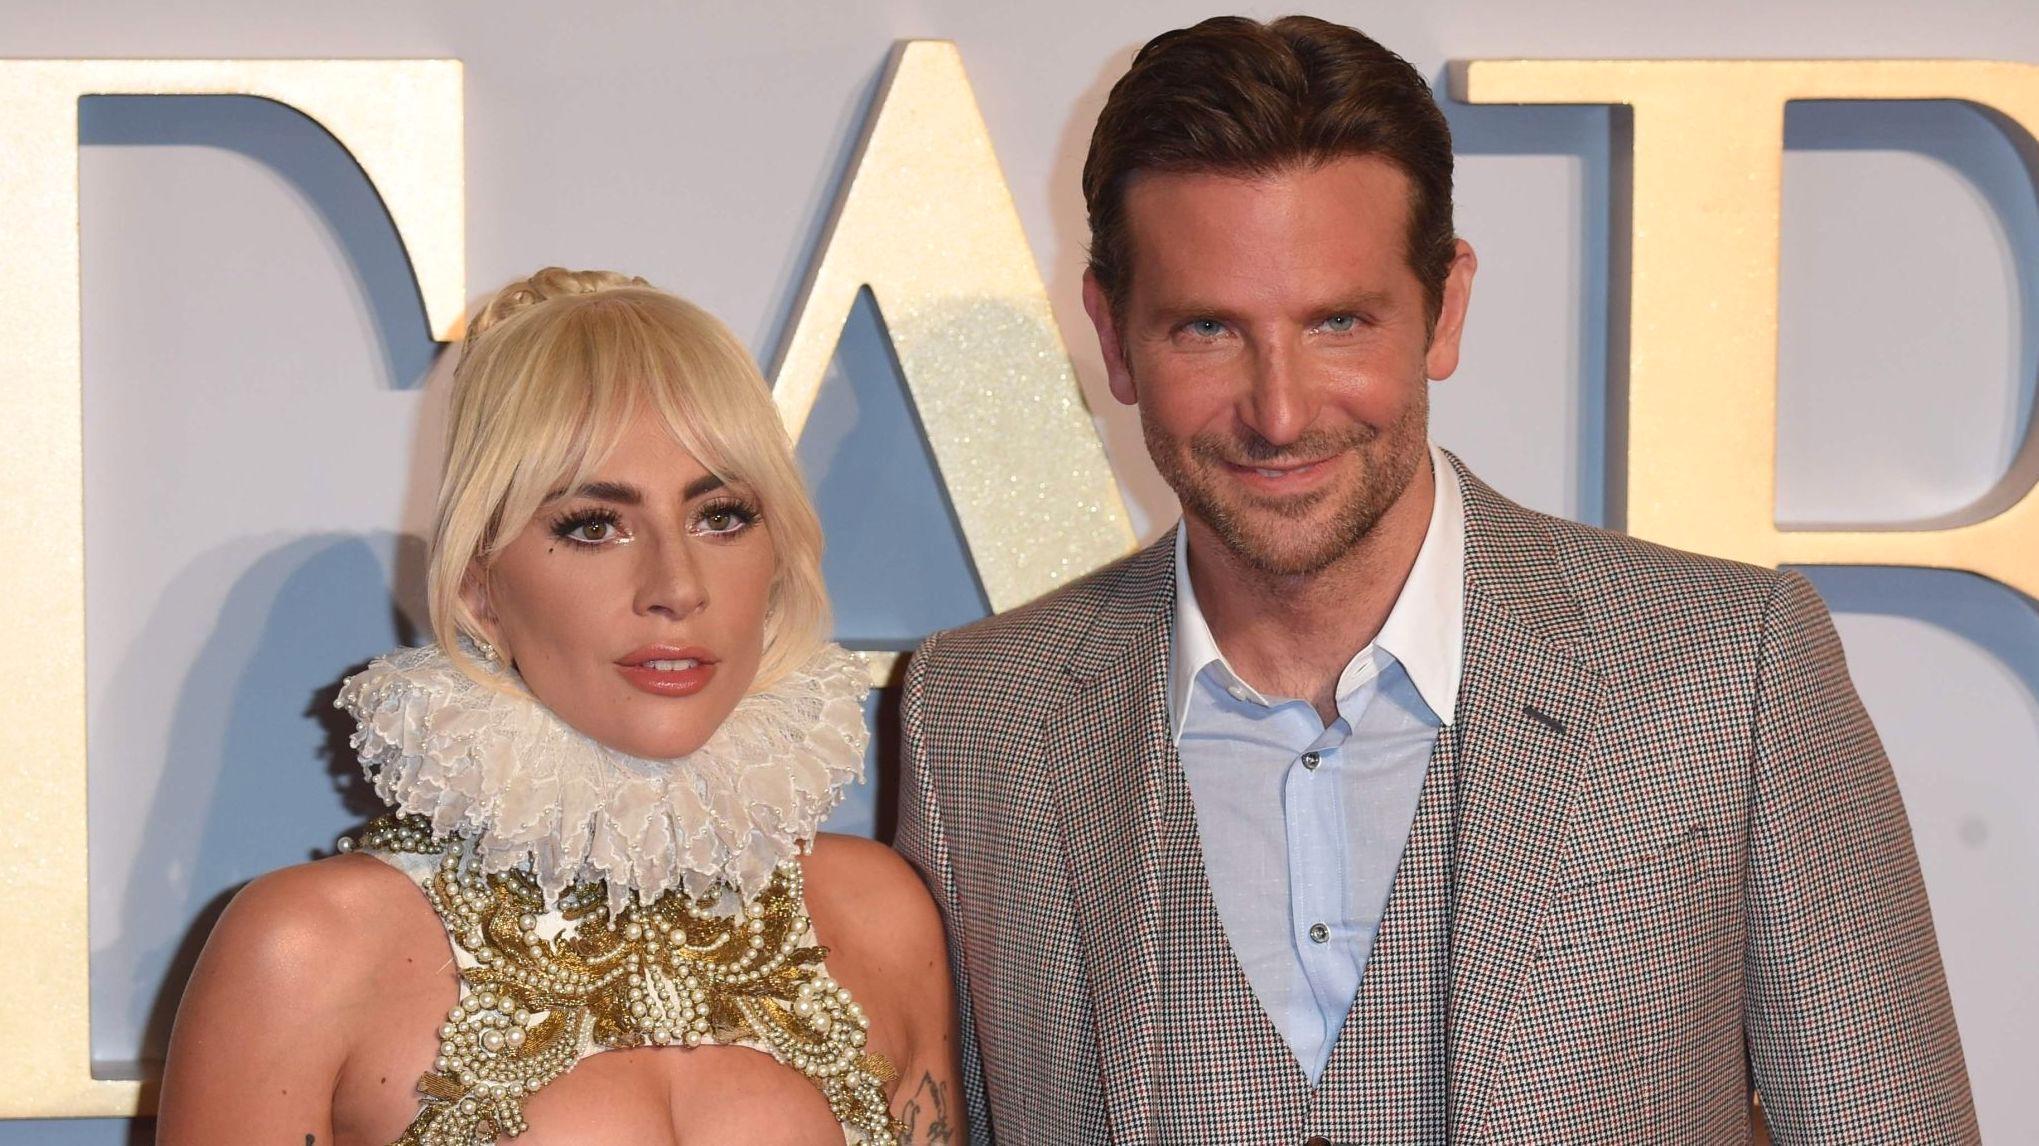 NOMINERTE: Både Lady Gaga og Bradley Cooper er nominerte til årets Golden Globe. Her avbildet under premieren for filmen de begge er nominert for, «A Star is Born». Foto: Anthony Harvey/AFP